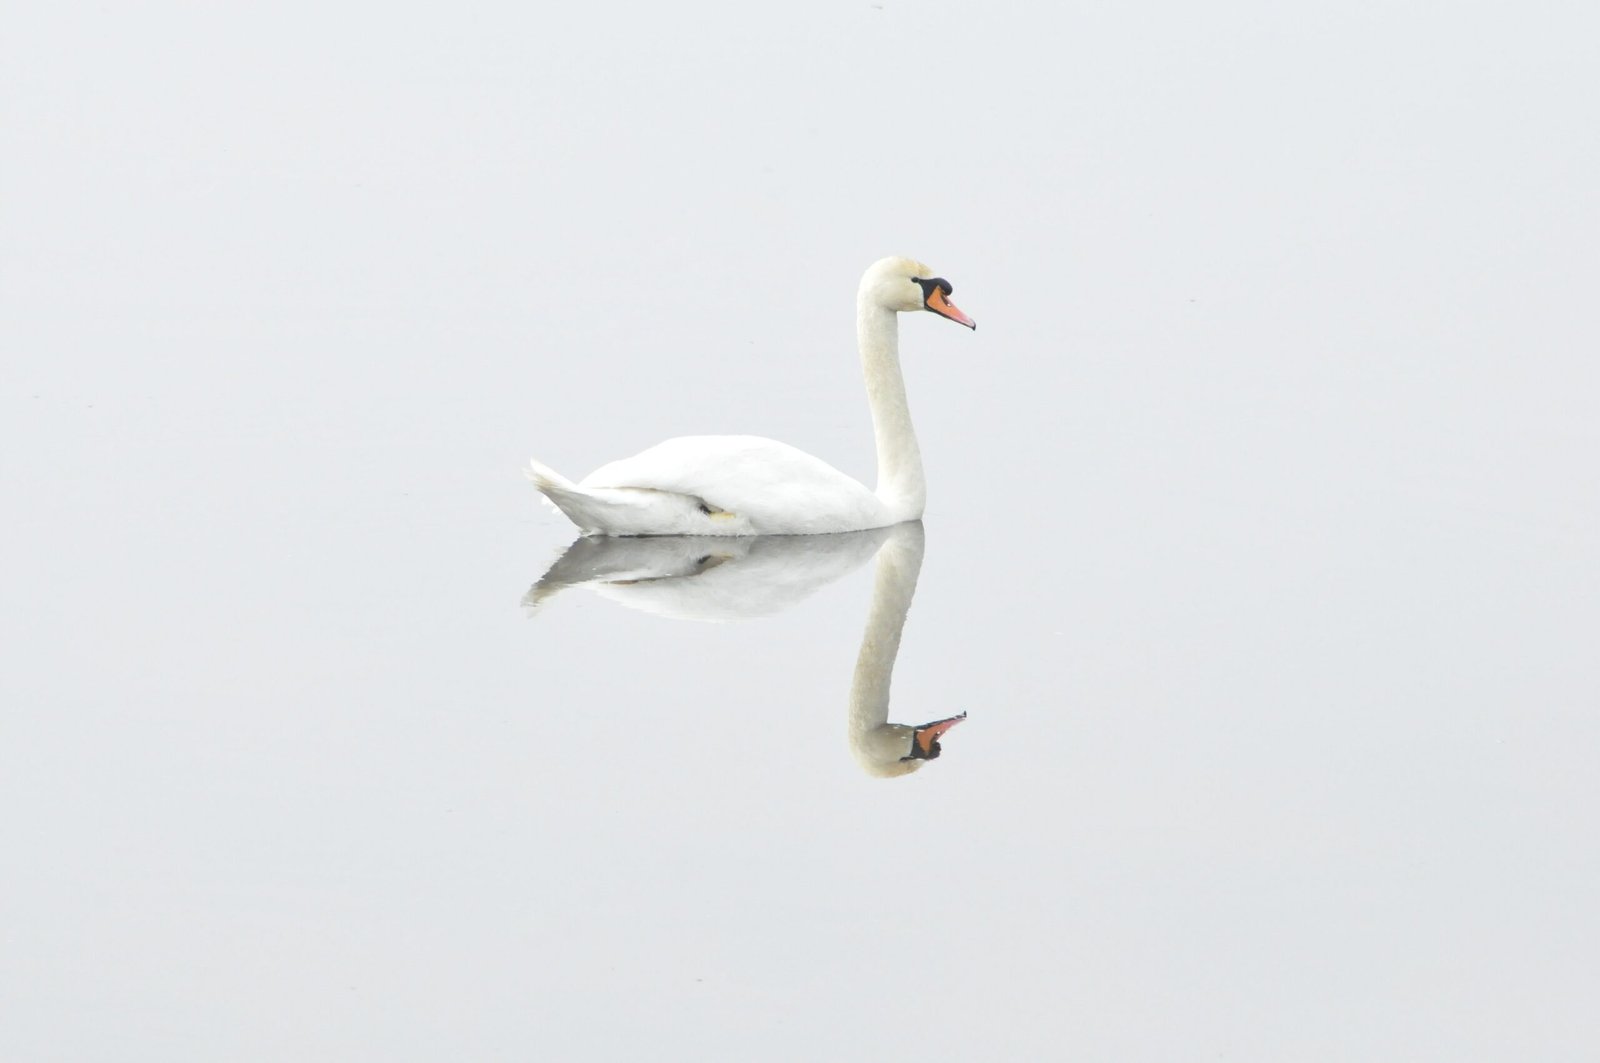 A swan in a mirror-like lake